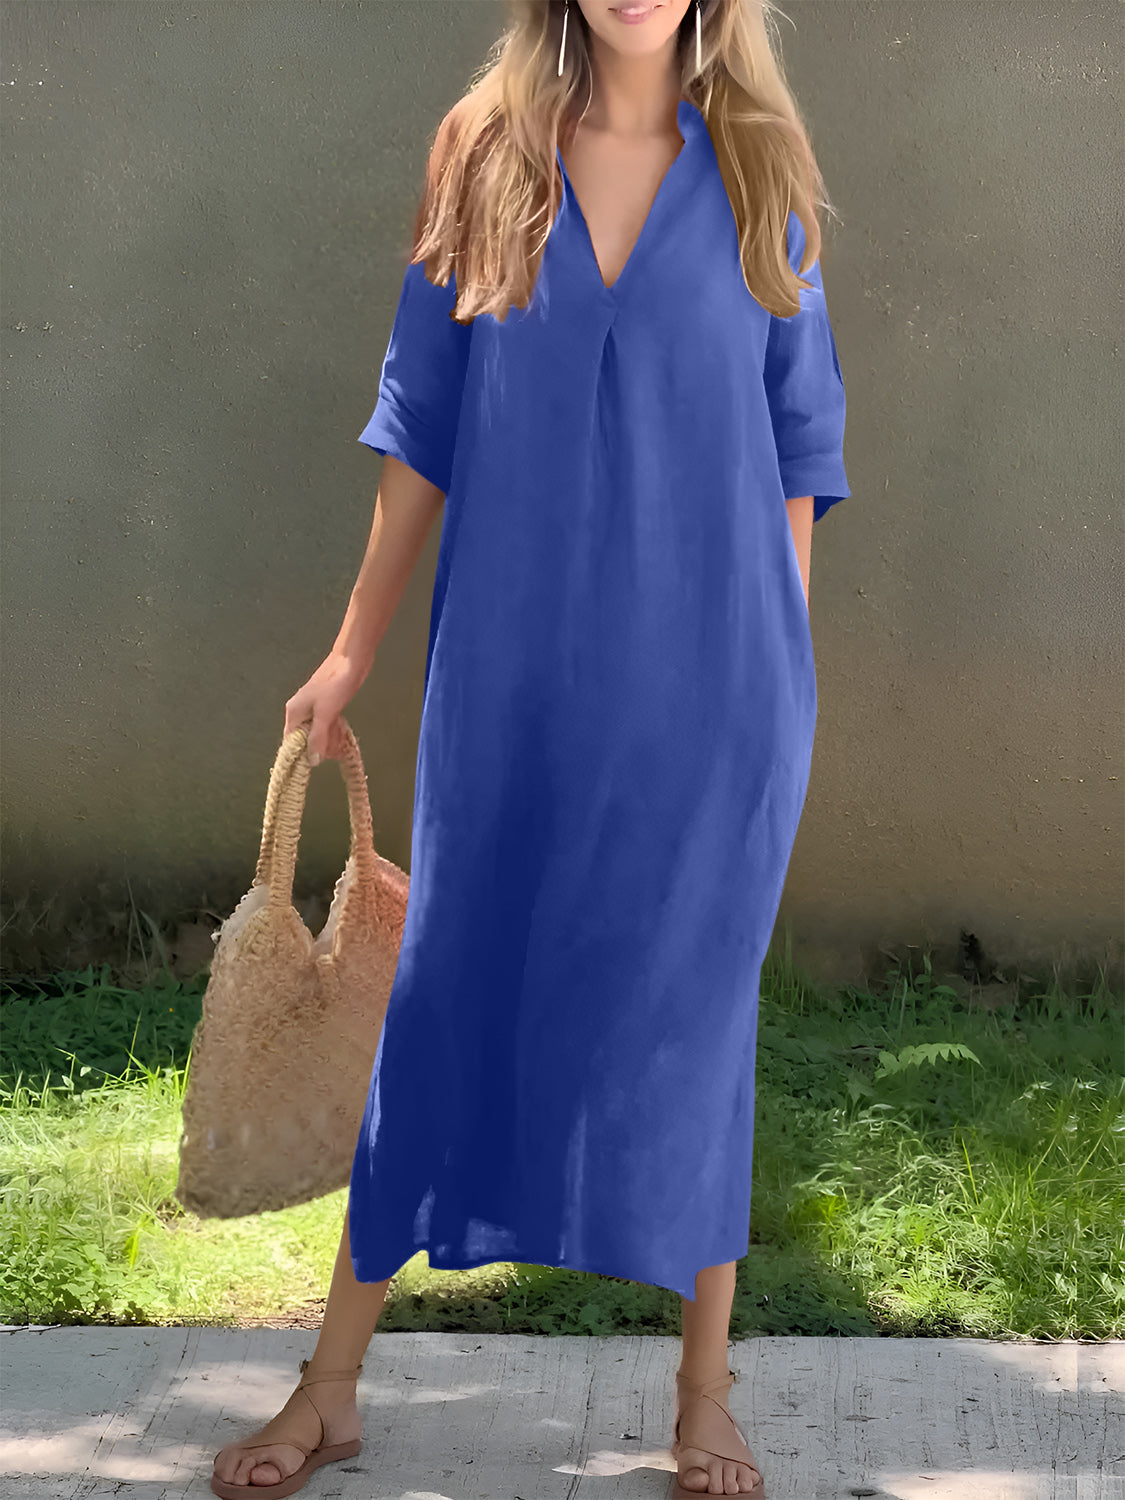 Versatile blue maxi dress with an elegant V-neckline and convenient pockets.